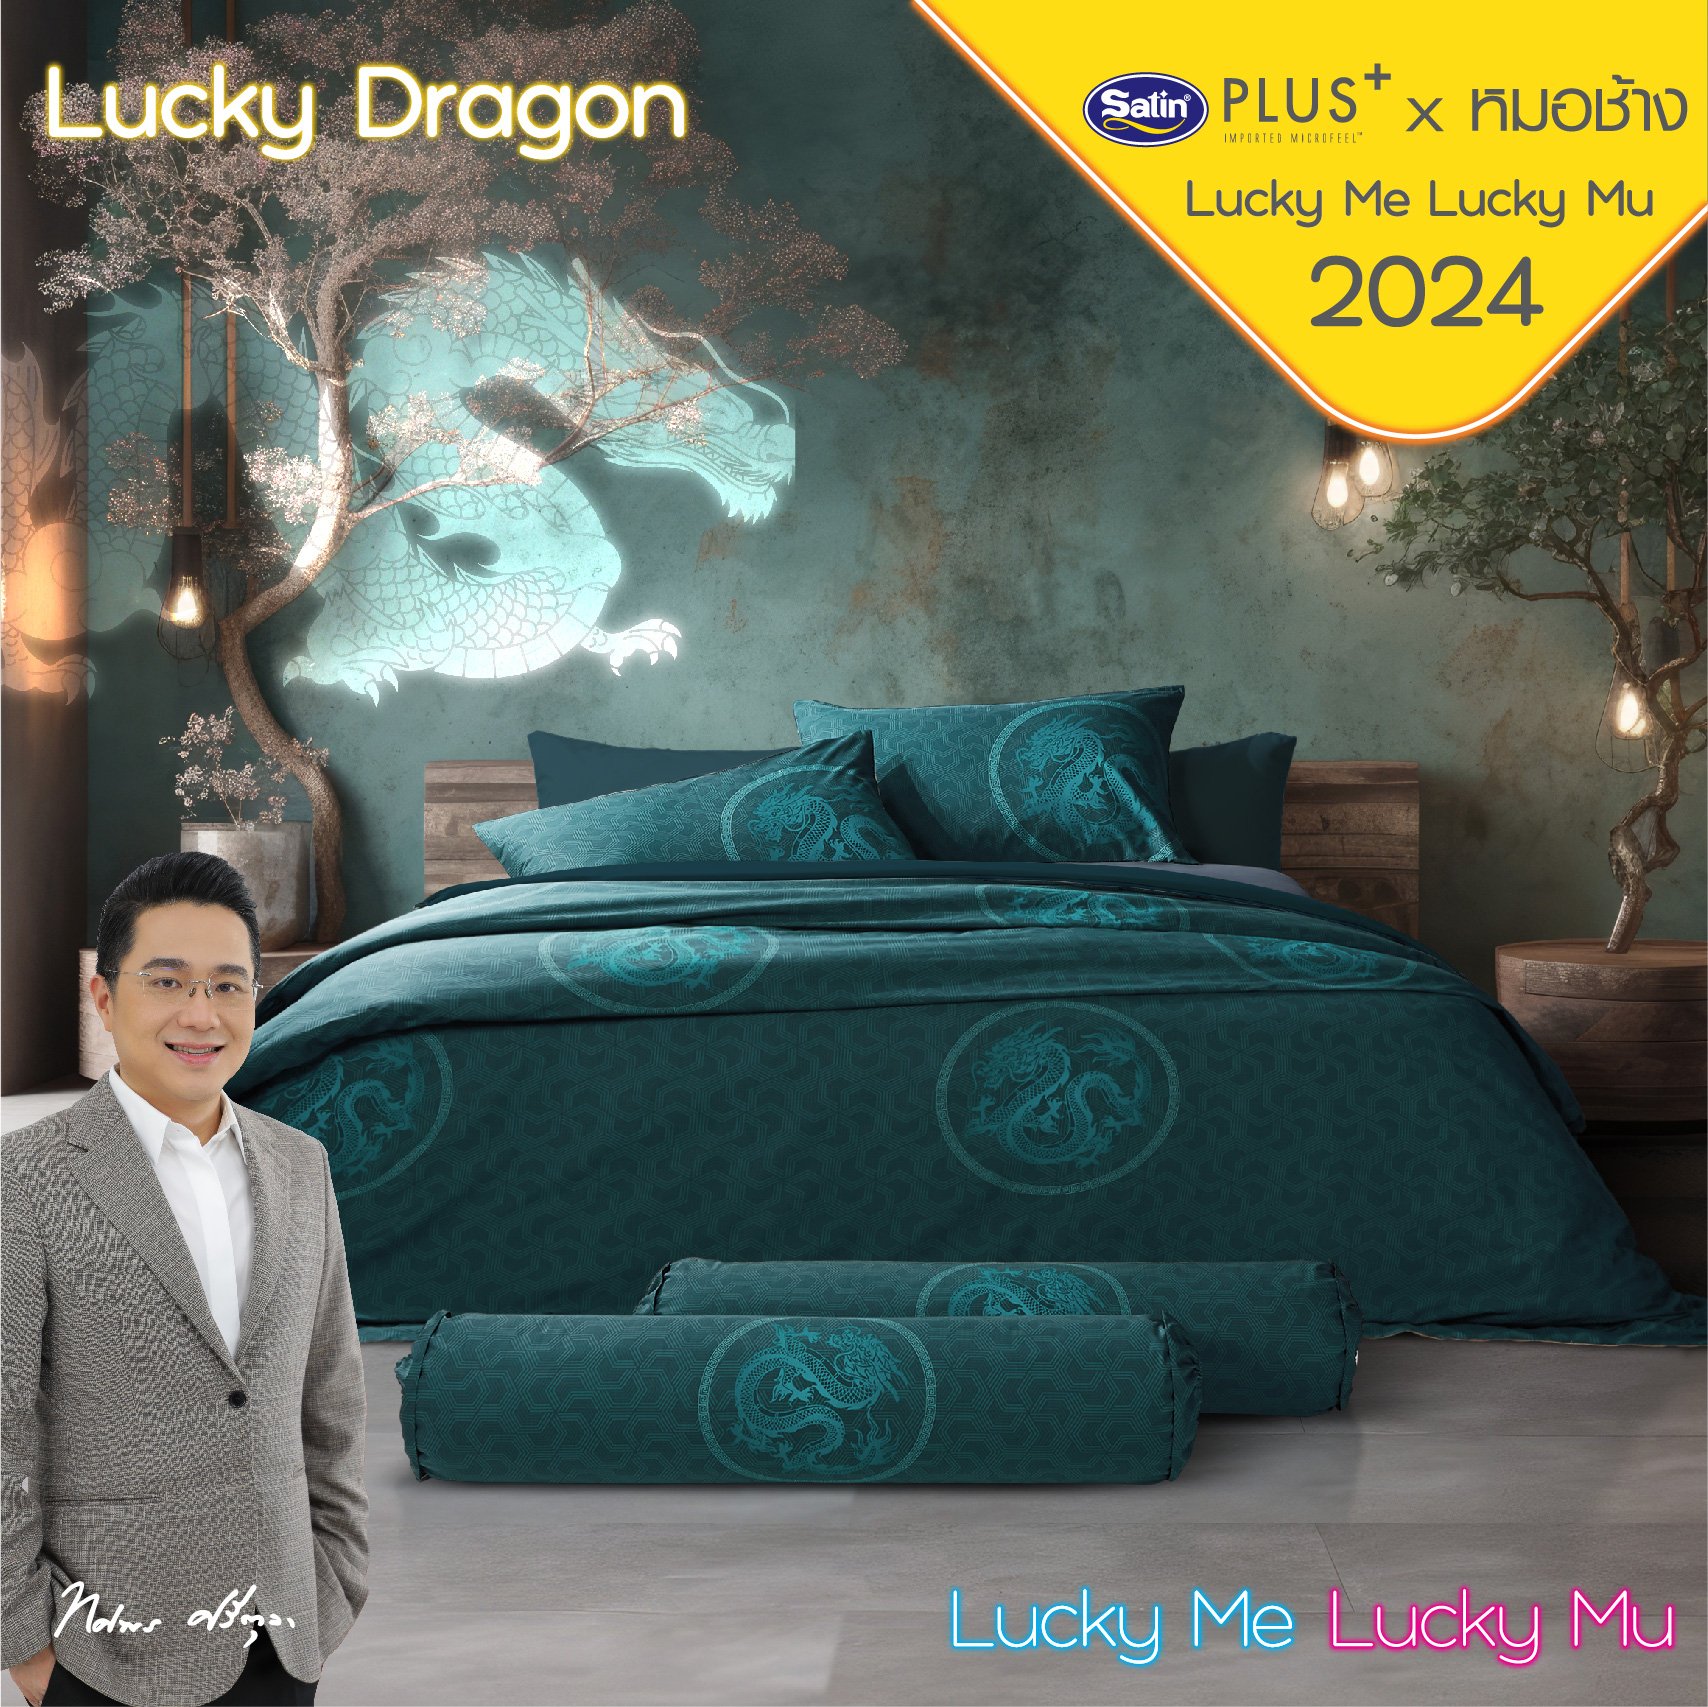 2024 Satin Plus Lucky Dragon ชุดผ้าปูที่นอน พร้อมผ้านวม ลายมังกร Limited Edition